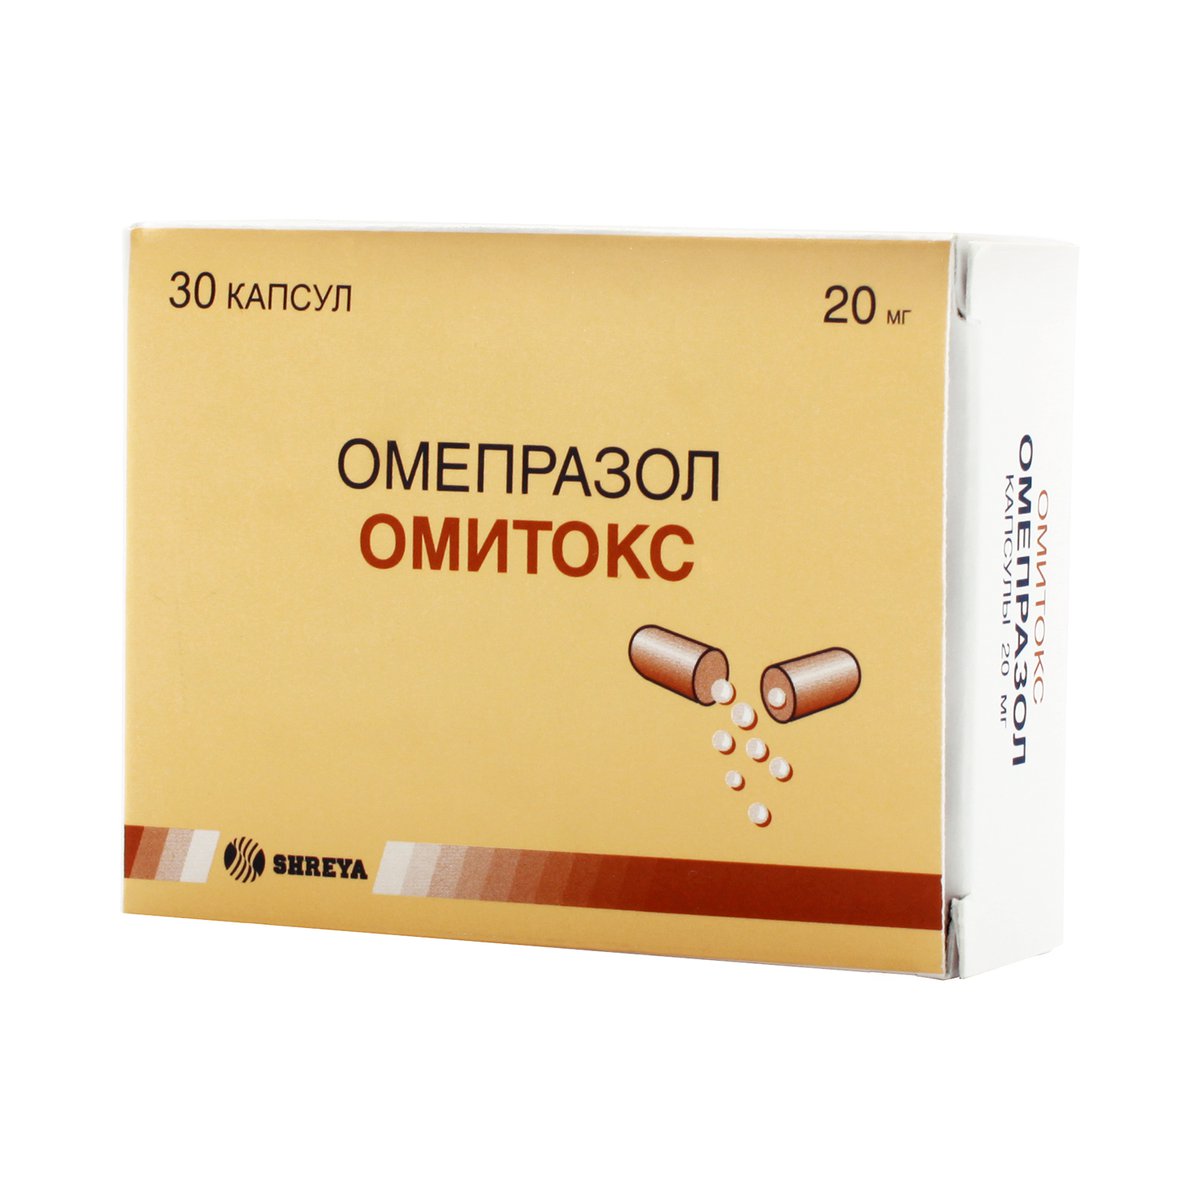 Омитокс (капсулы, 30 шт, 20 мг) - цена,  онлайн  .